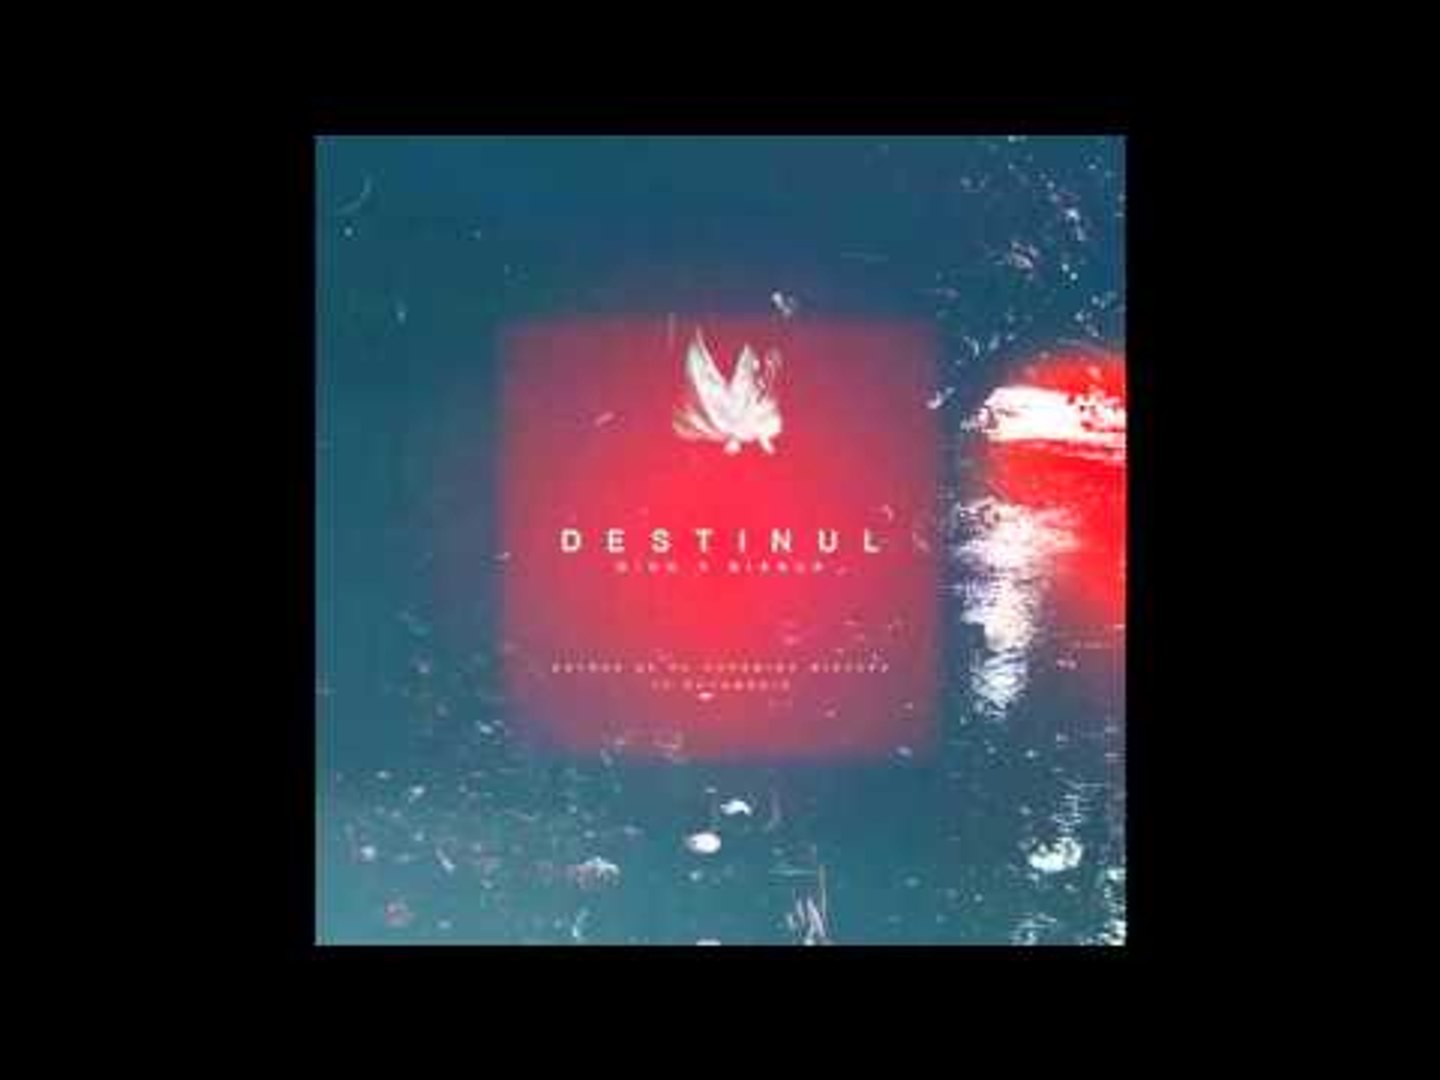 Dinoecelmaitare - Destinul (feat. Bianca) + DOPAMINA Mixtape Download